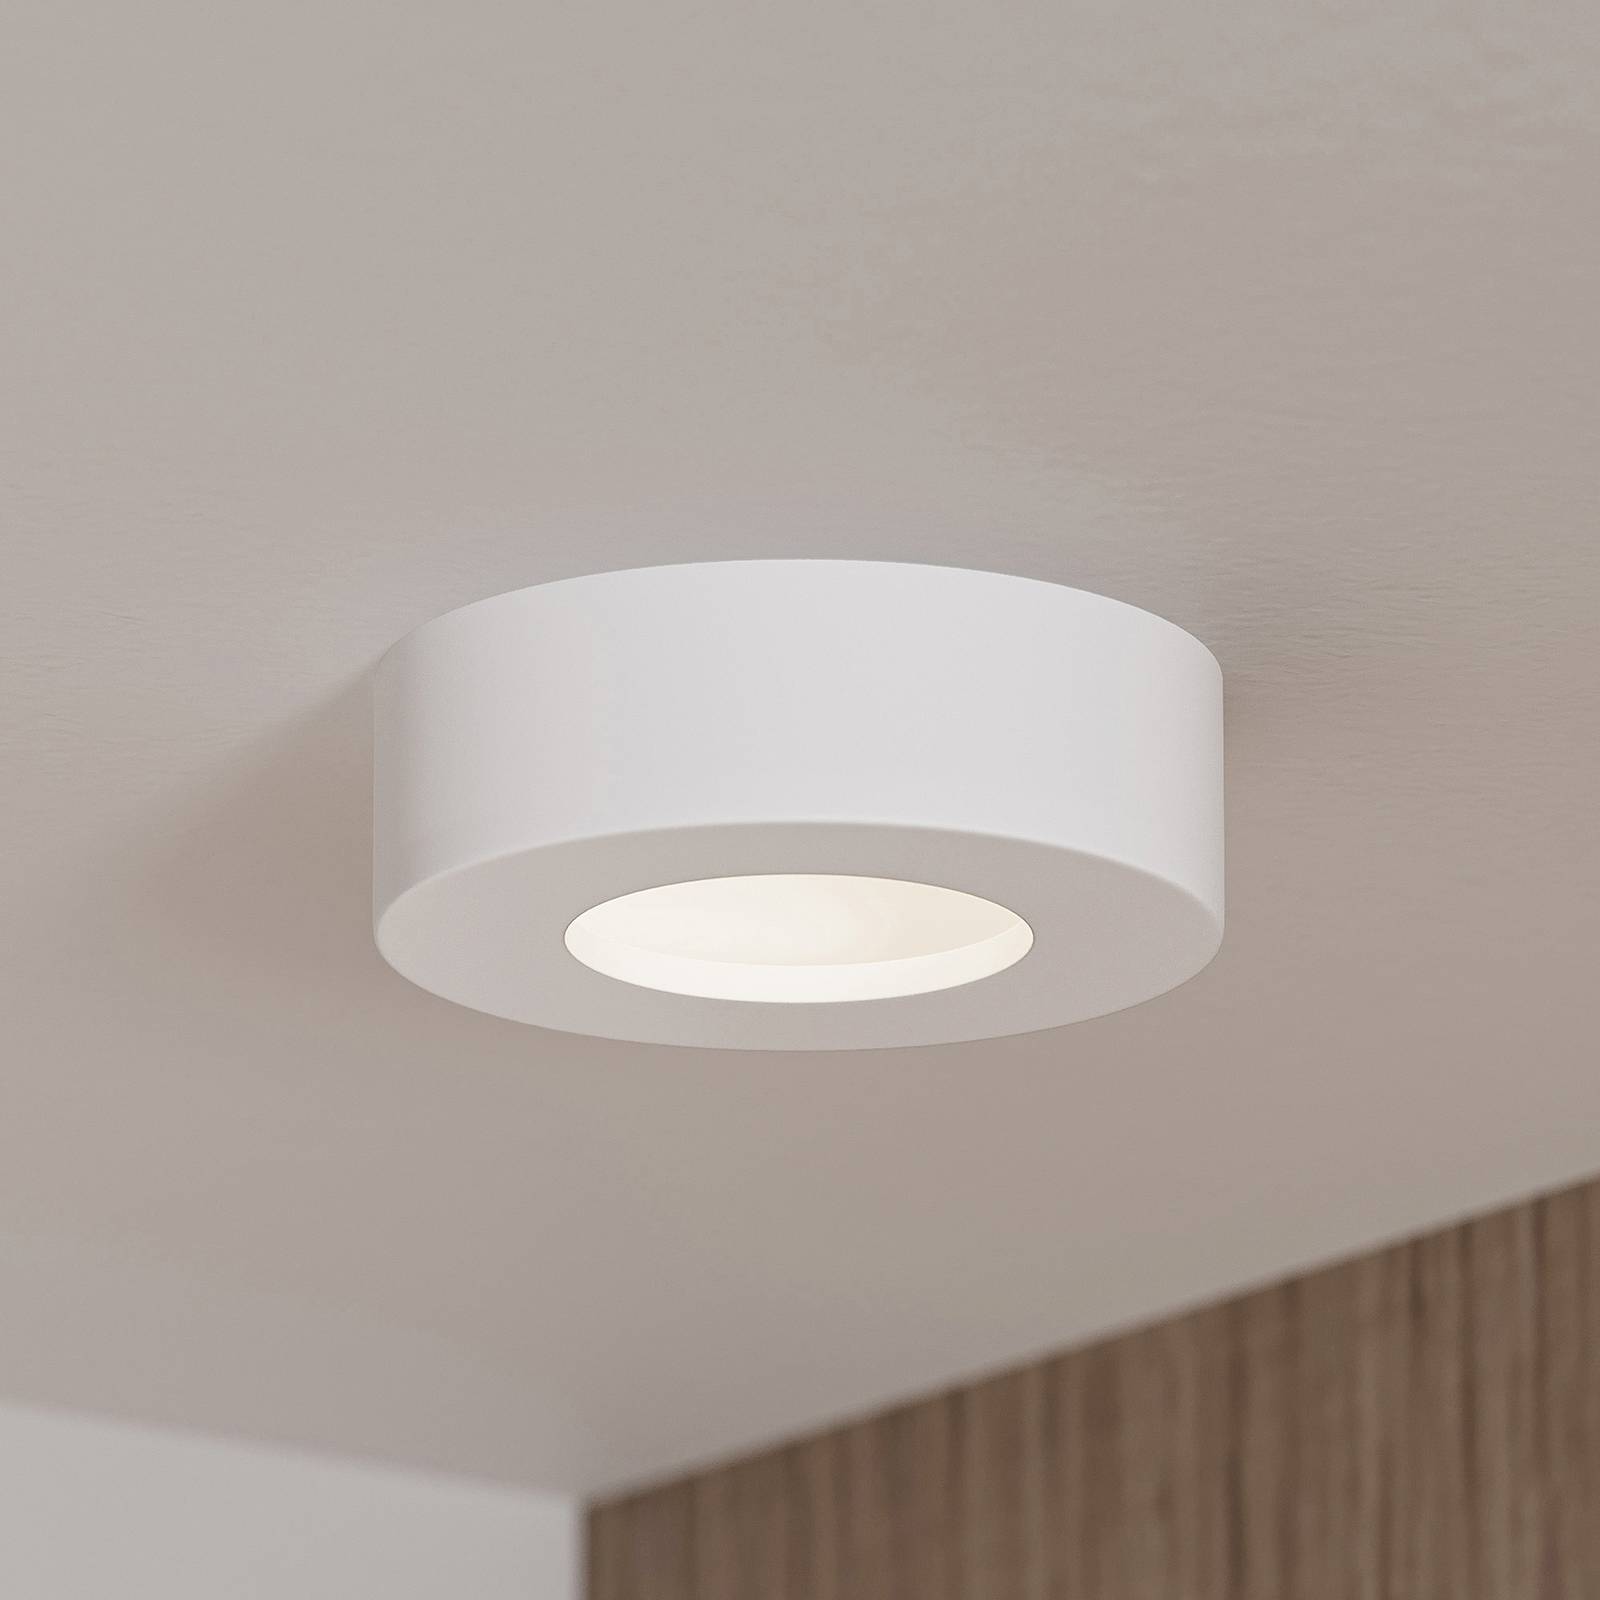 Image of Prios Edwina plafonnier LED, blanc, 12,2 cm 4251911706901